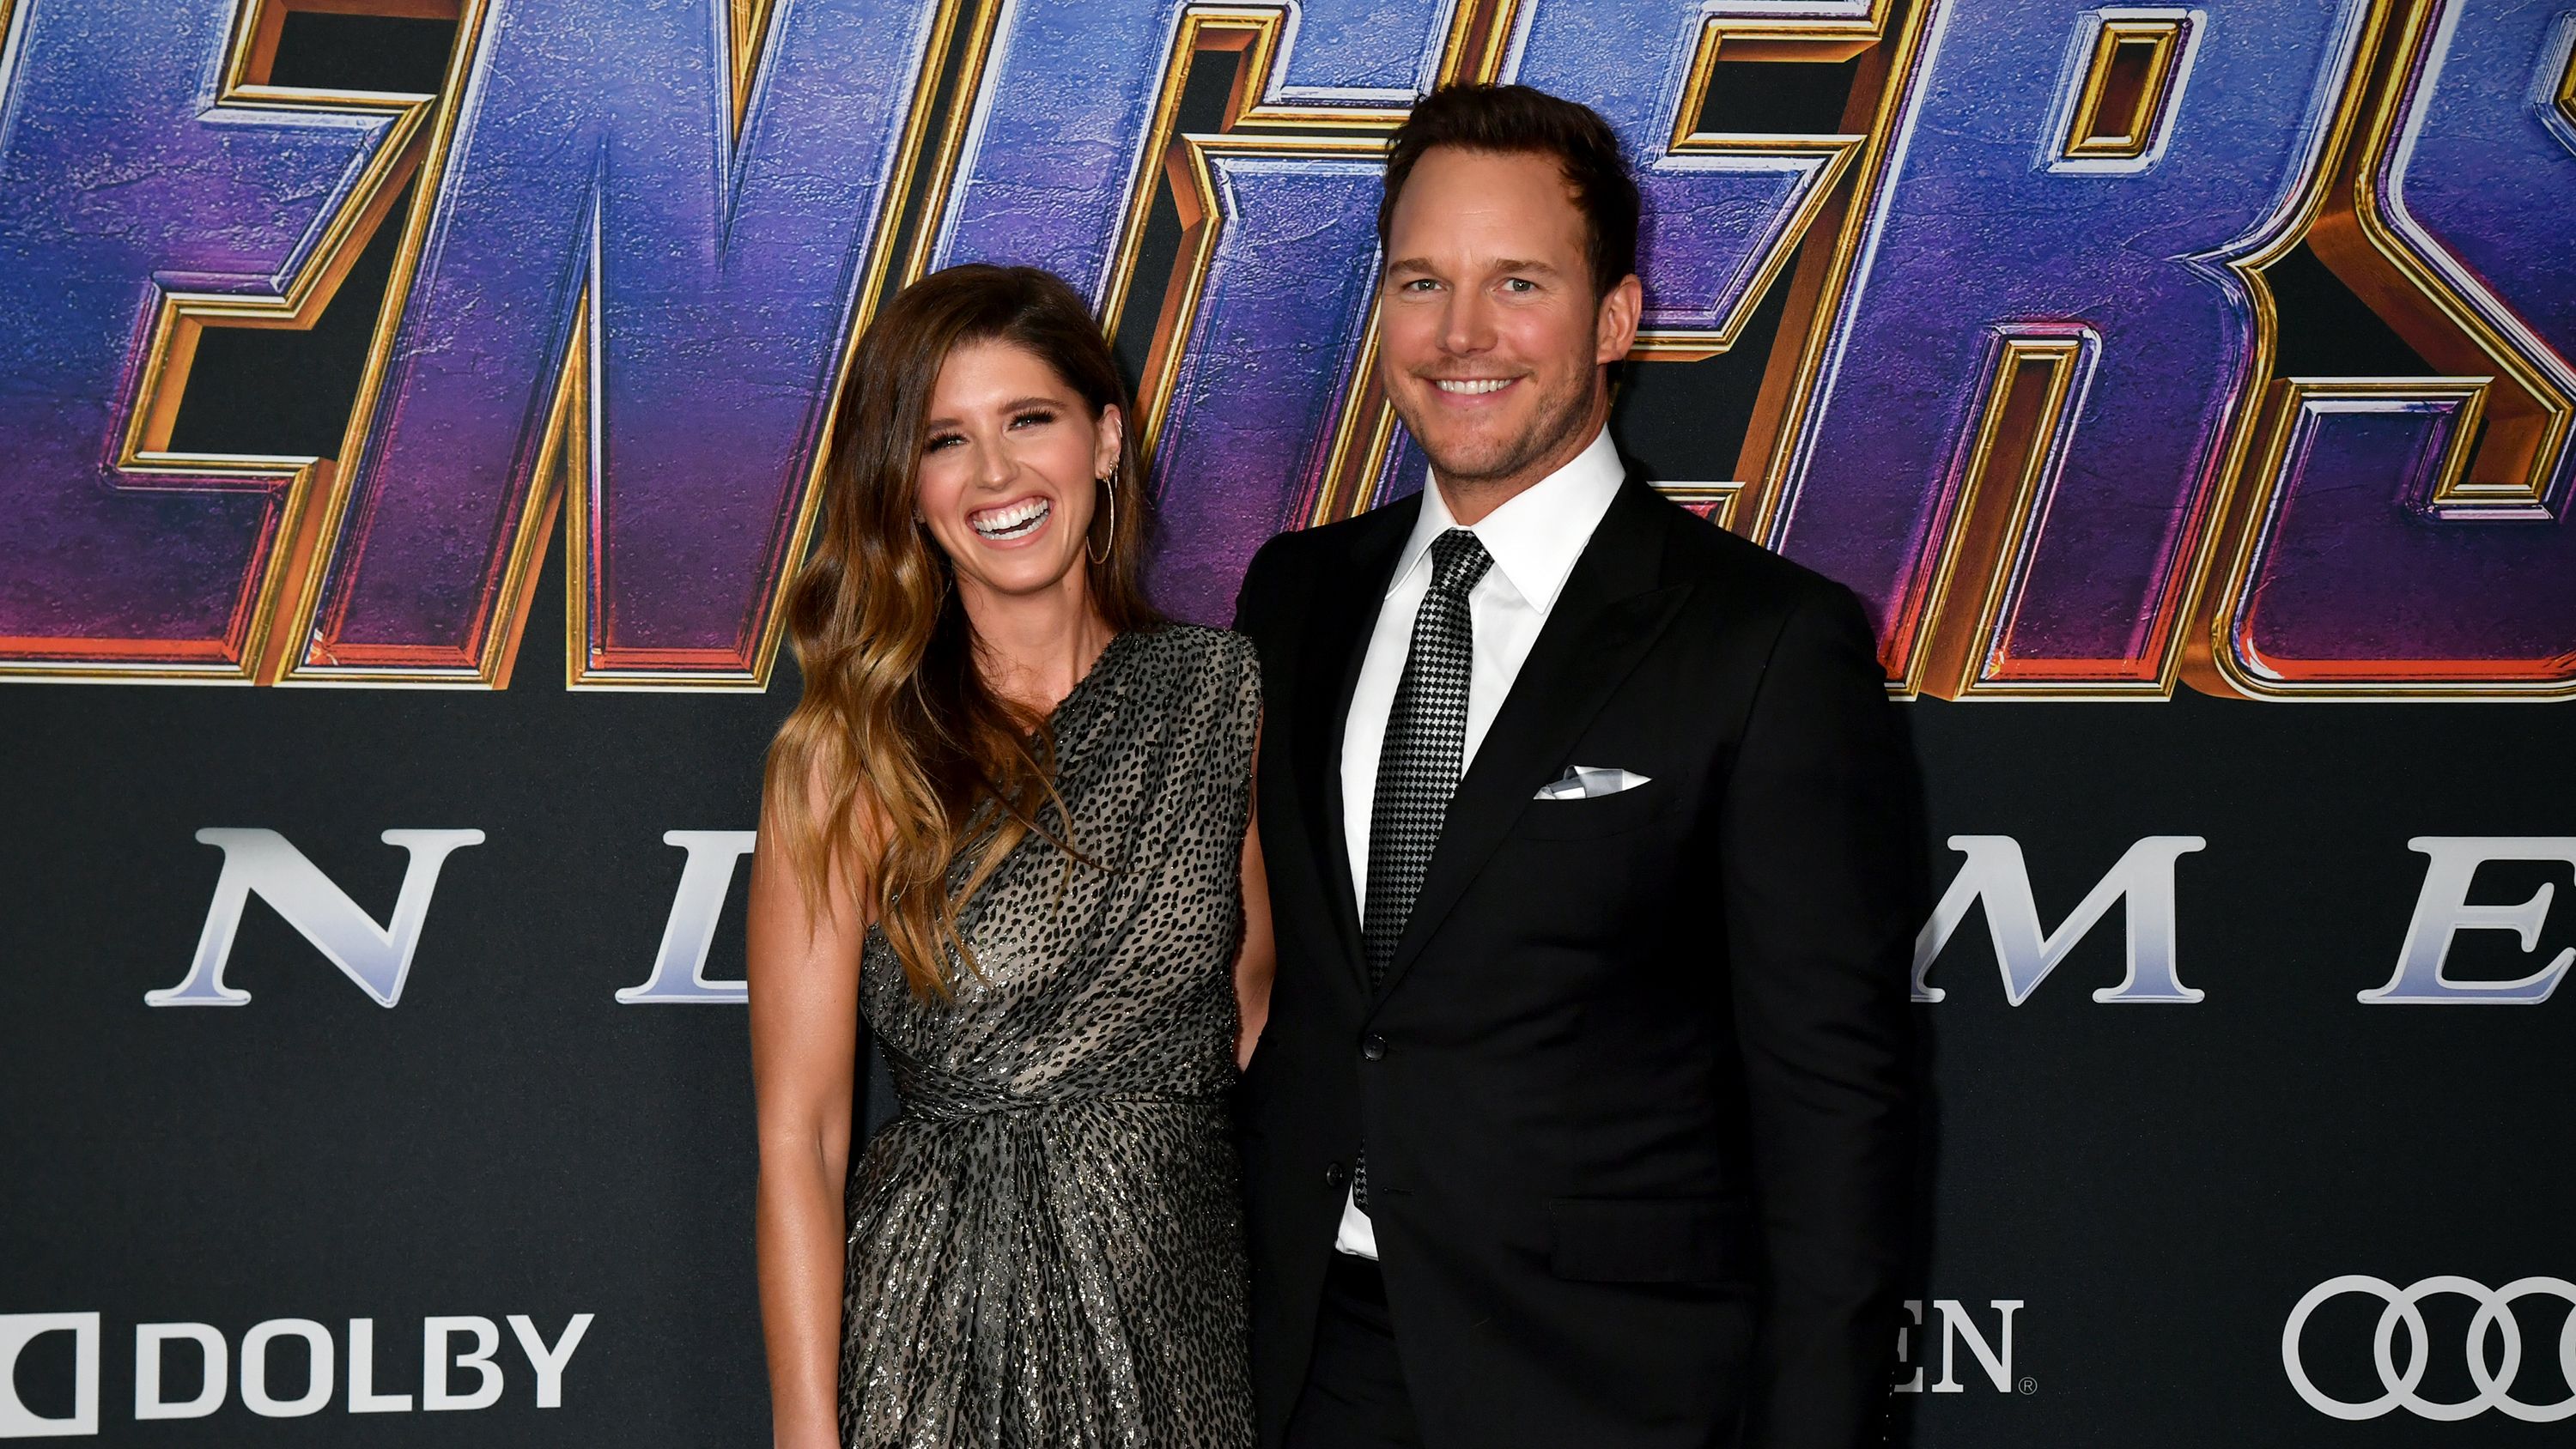 Chris Pratt's Wife Katherine Schwarzenegger Is Related To Arnold